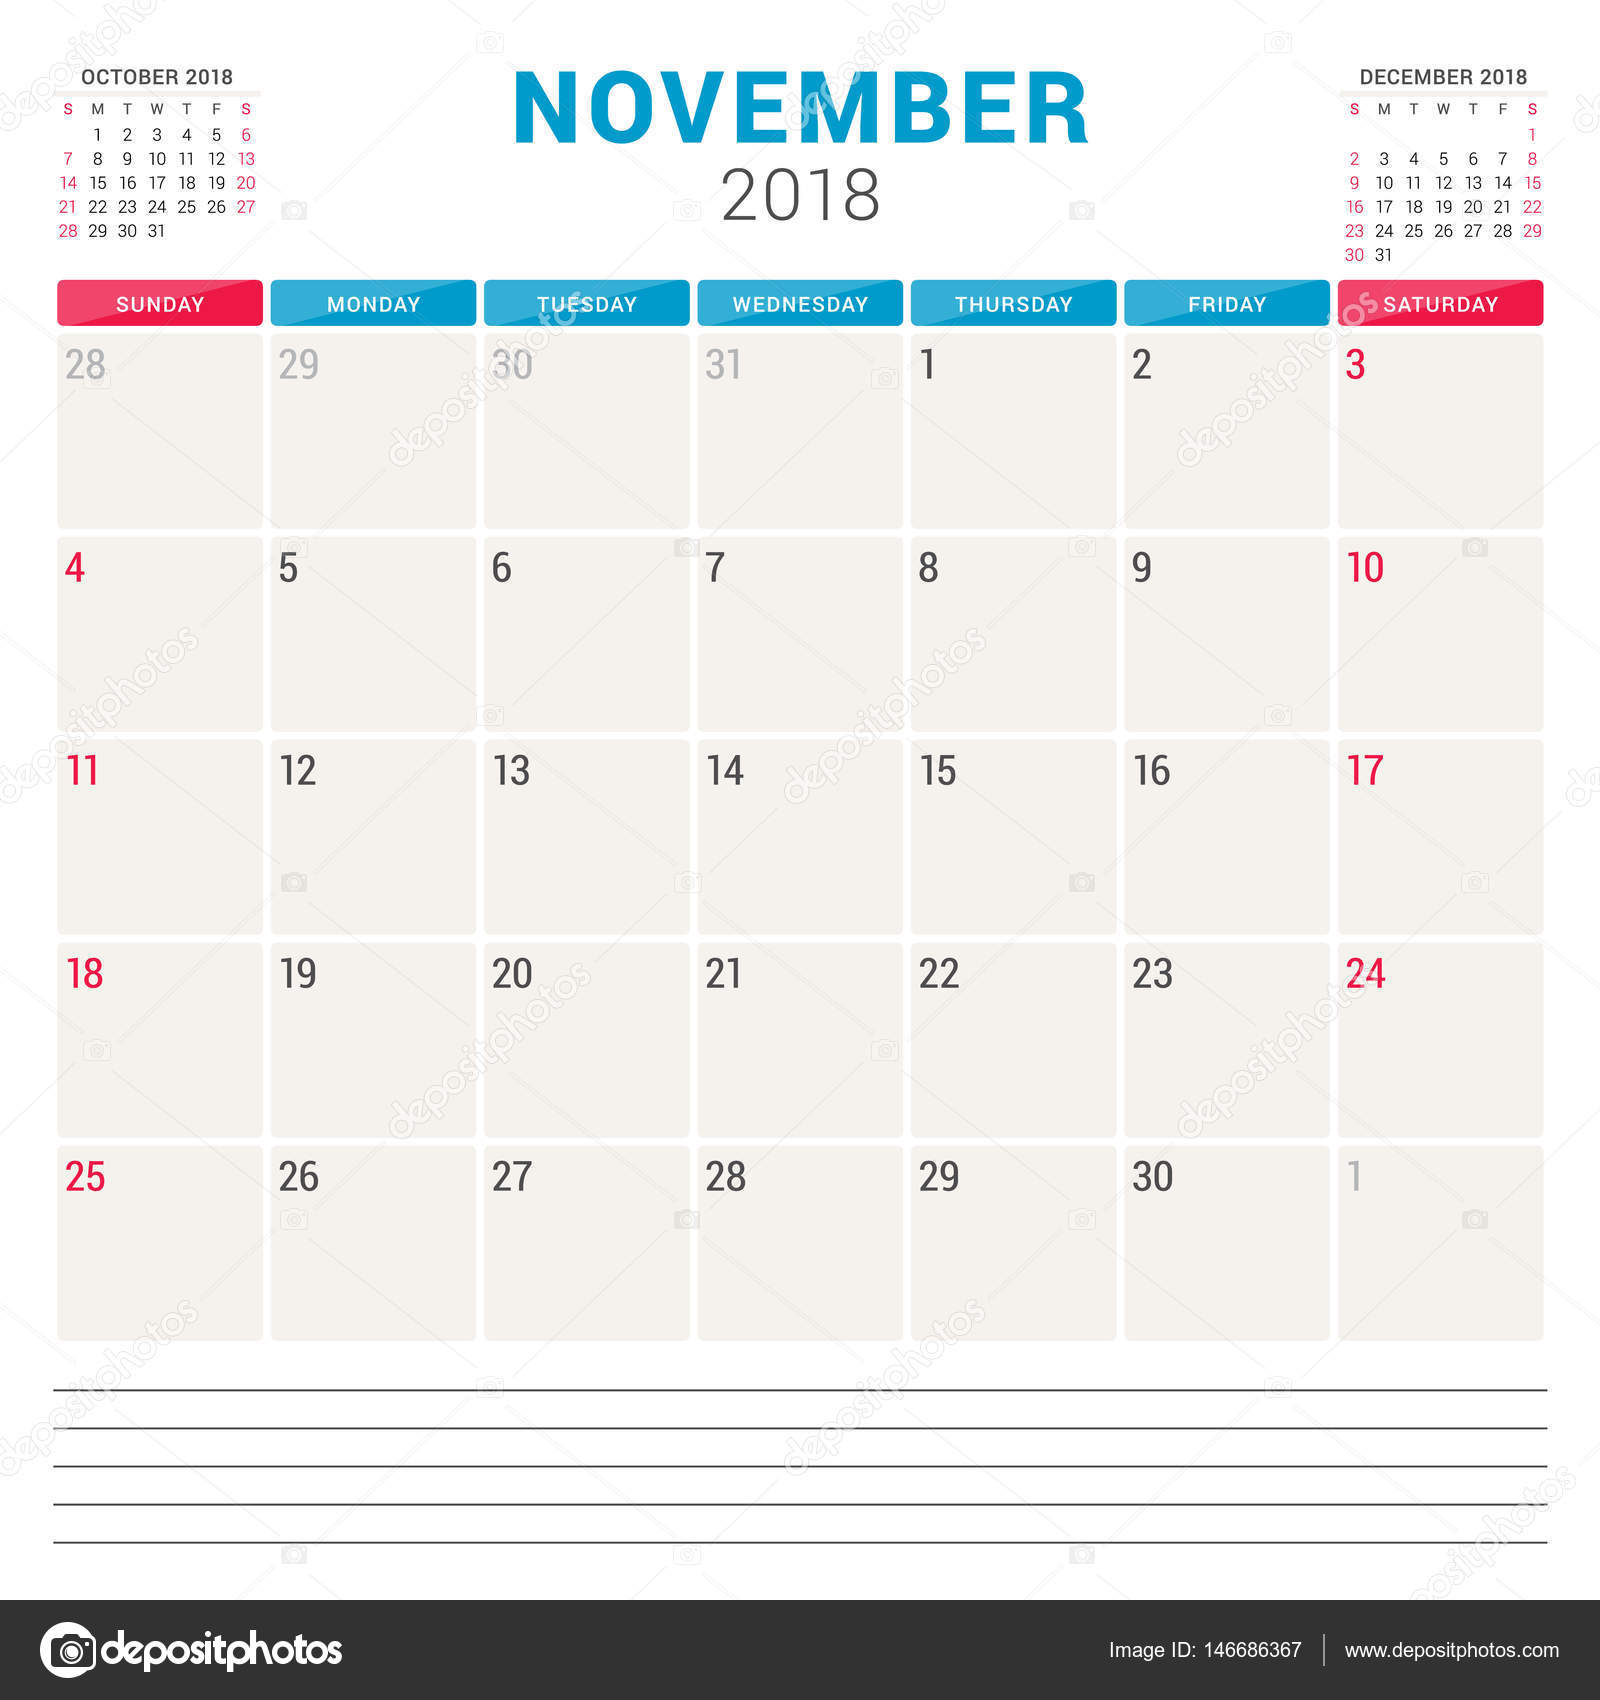 november-2018-calendar-planner-vector-design-template-week-starts-on